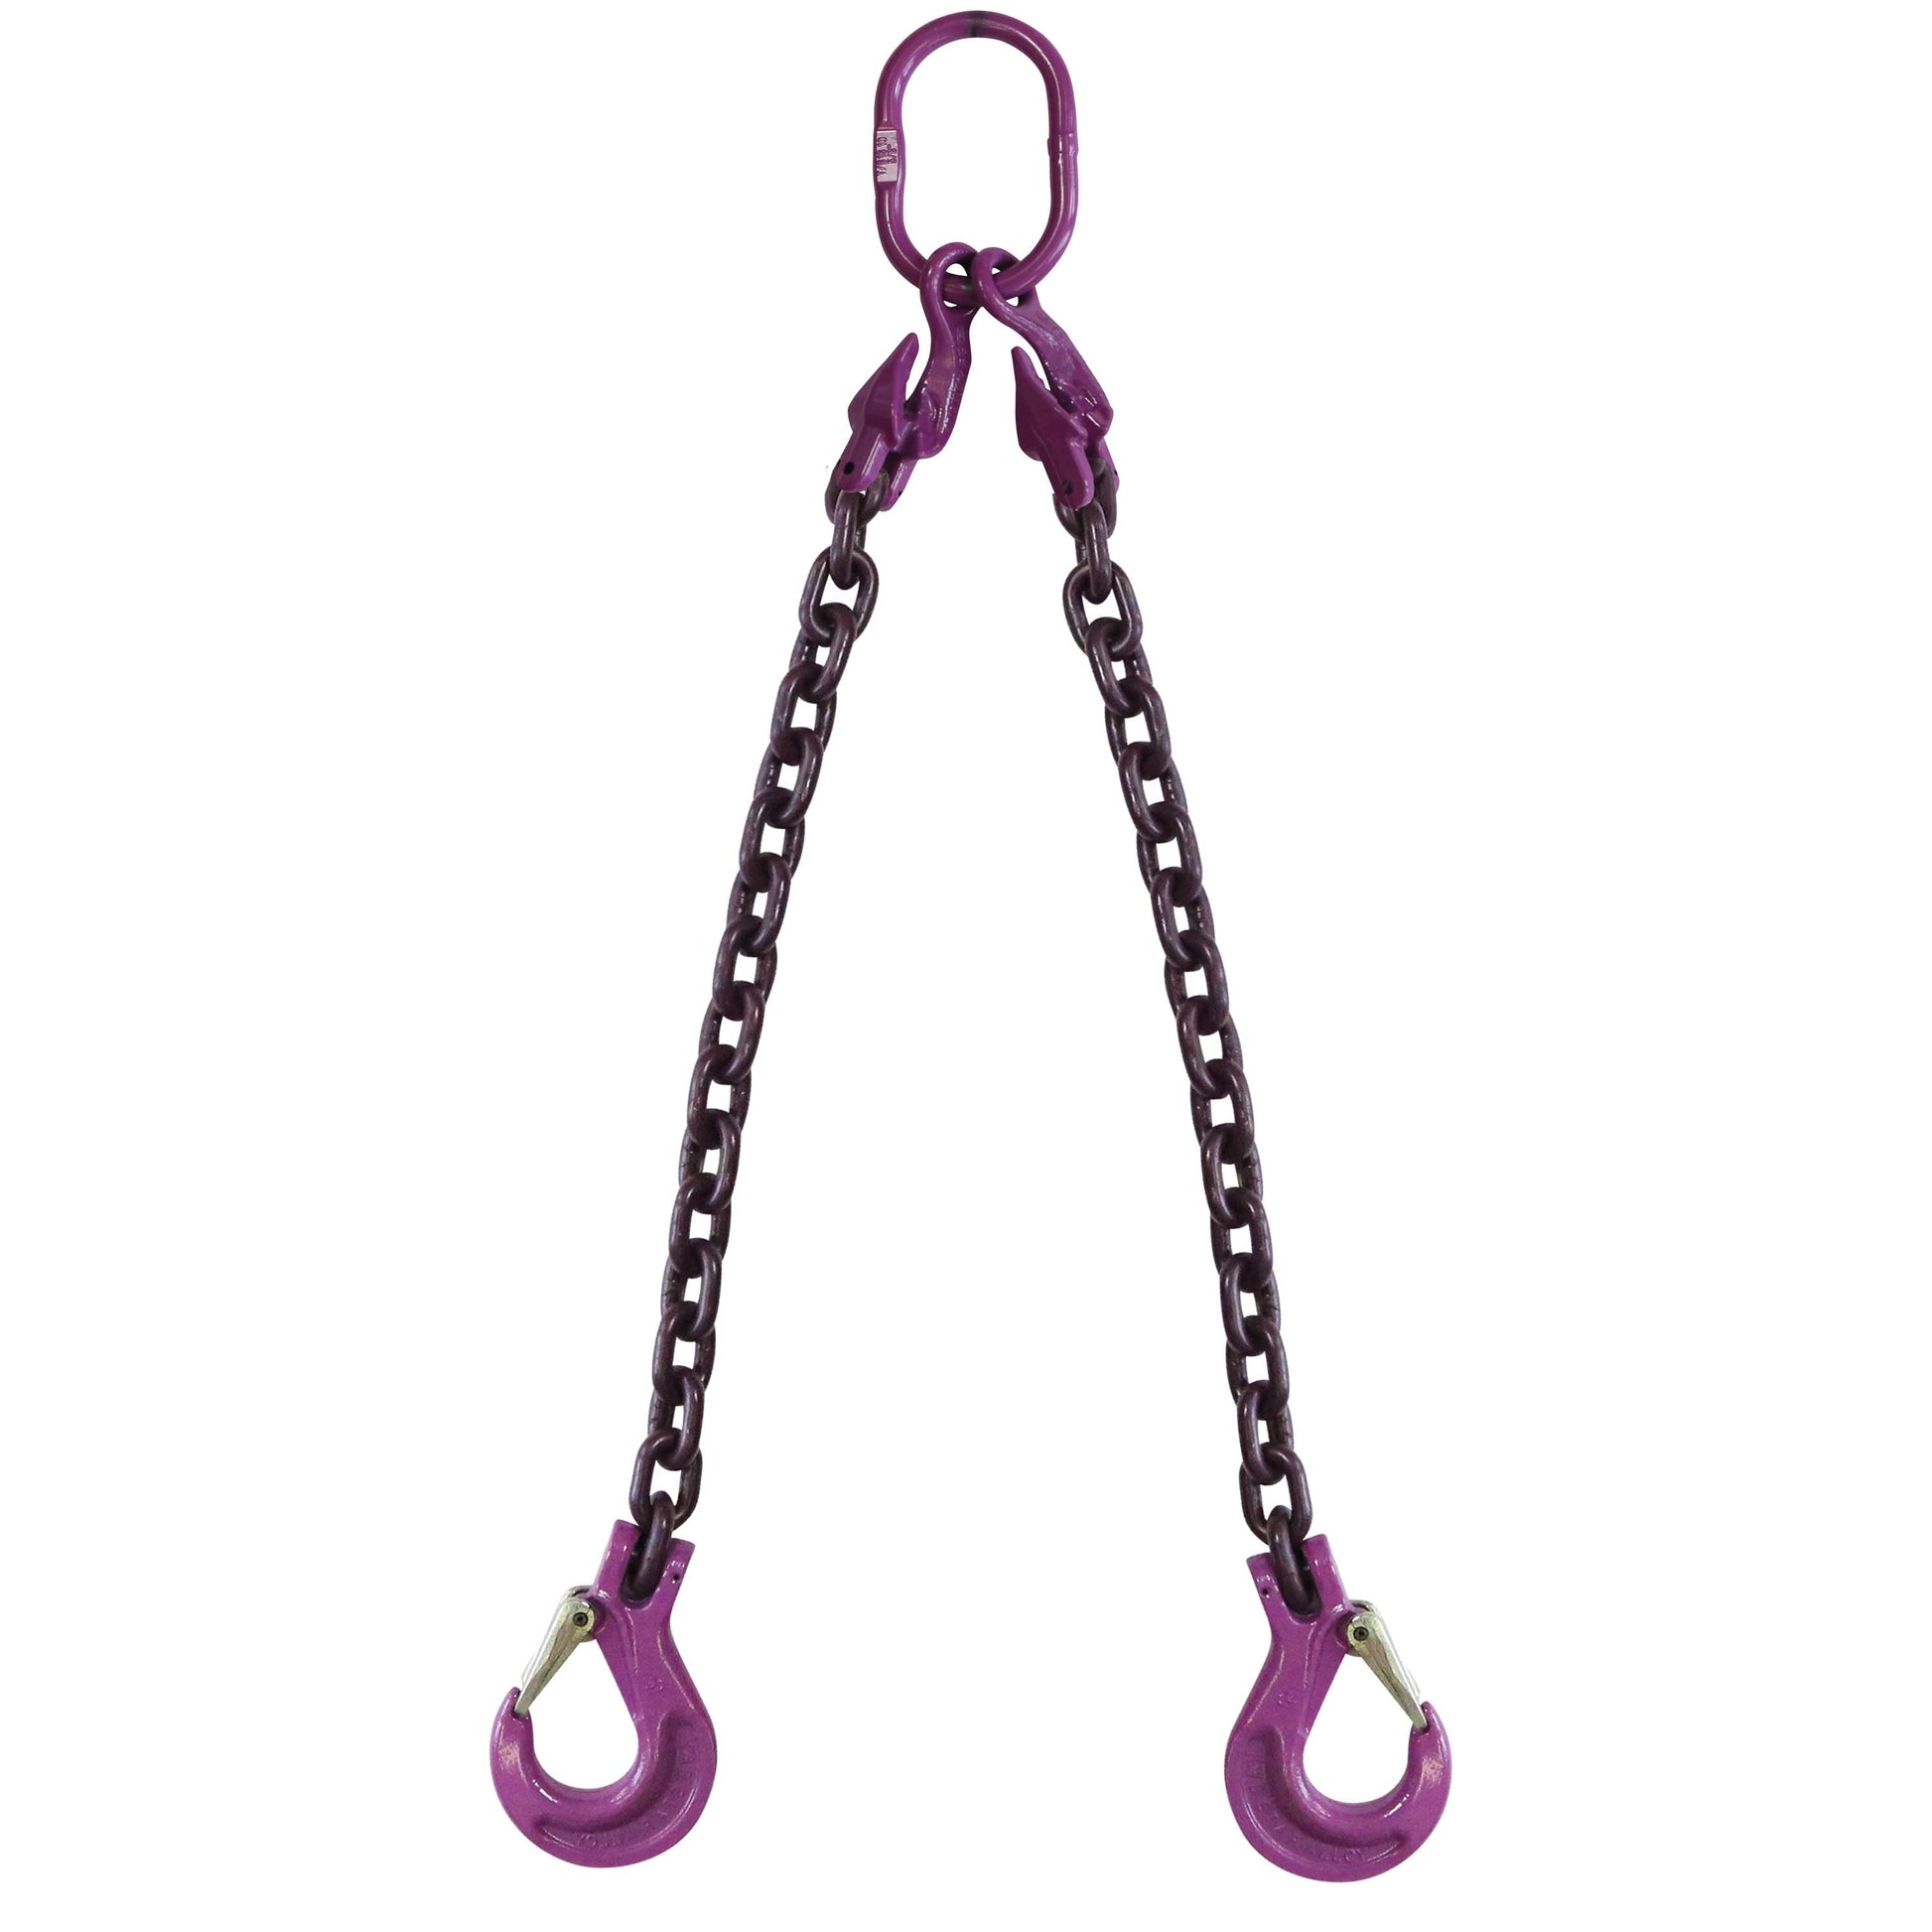 3/8" x 15' - Adjustable 2 Leg Chain Sling w/ Sling Hooks - Grade 100 image 1 of 8